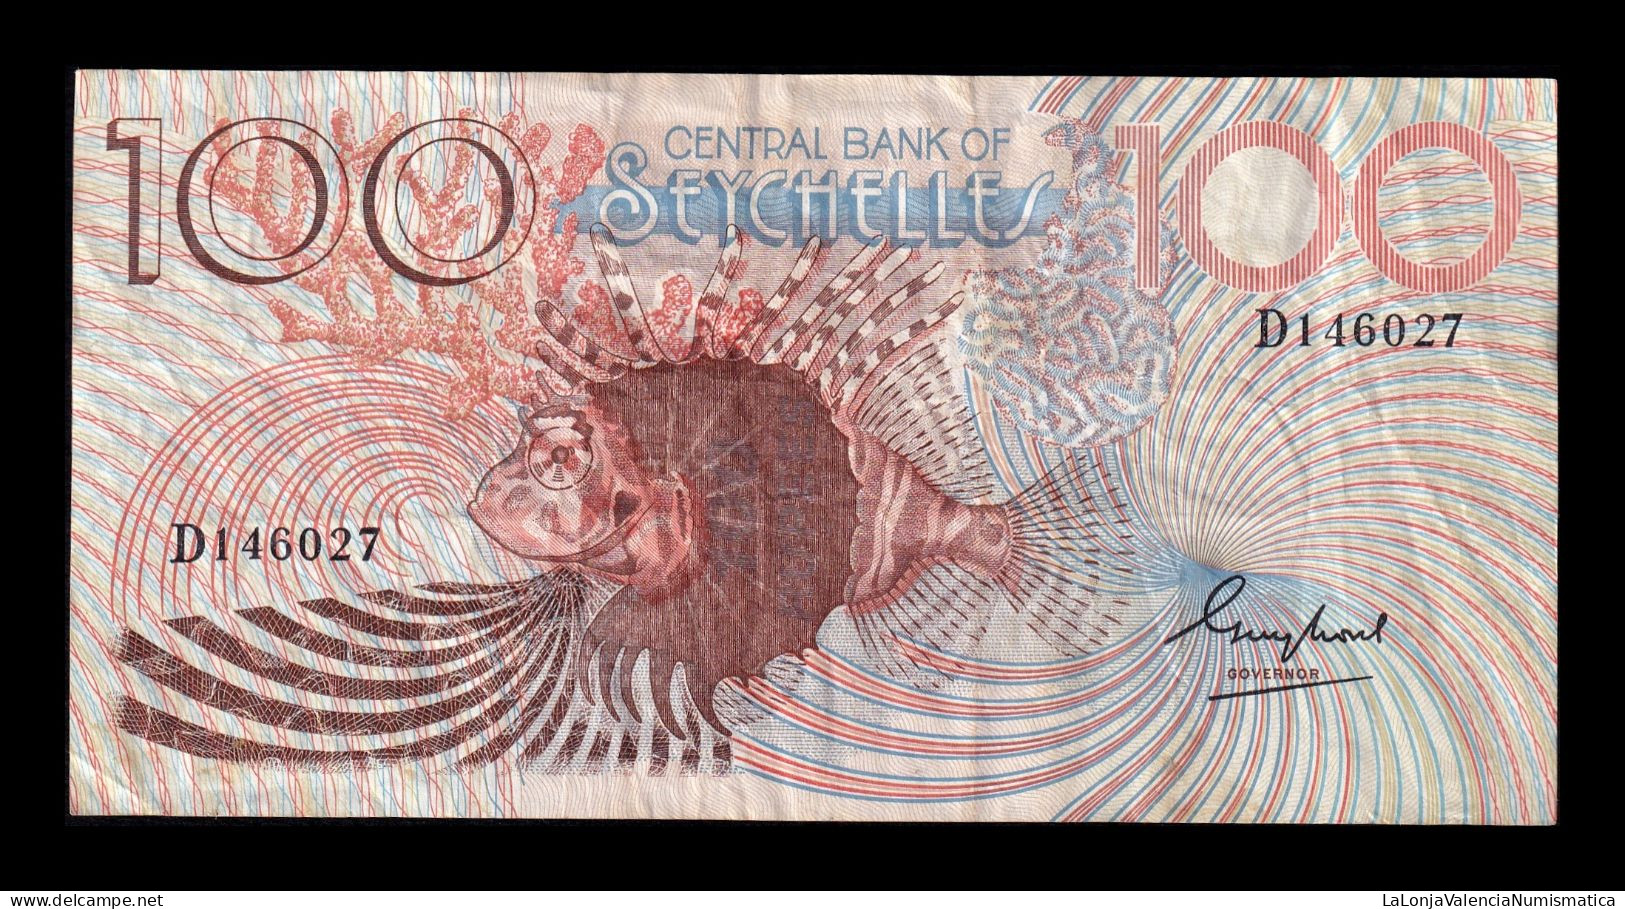 Seychelles 100 Rupees ND (1989) Pick 31 Mbc Vf - Seychelles